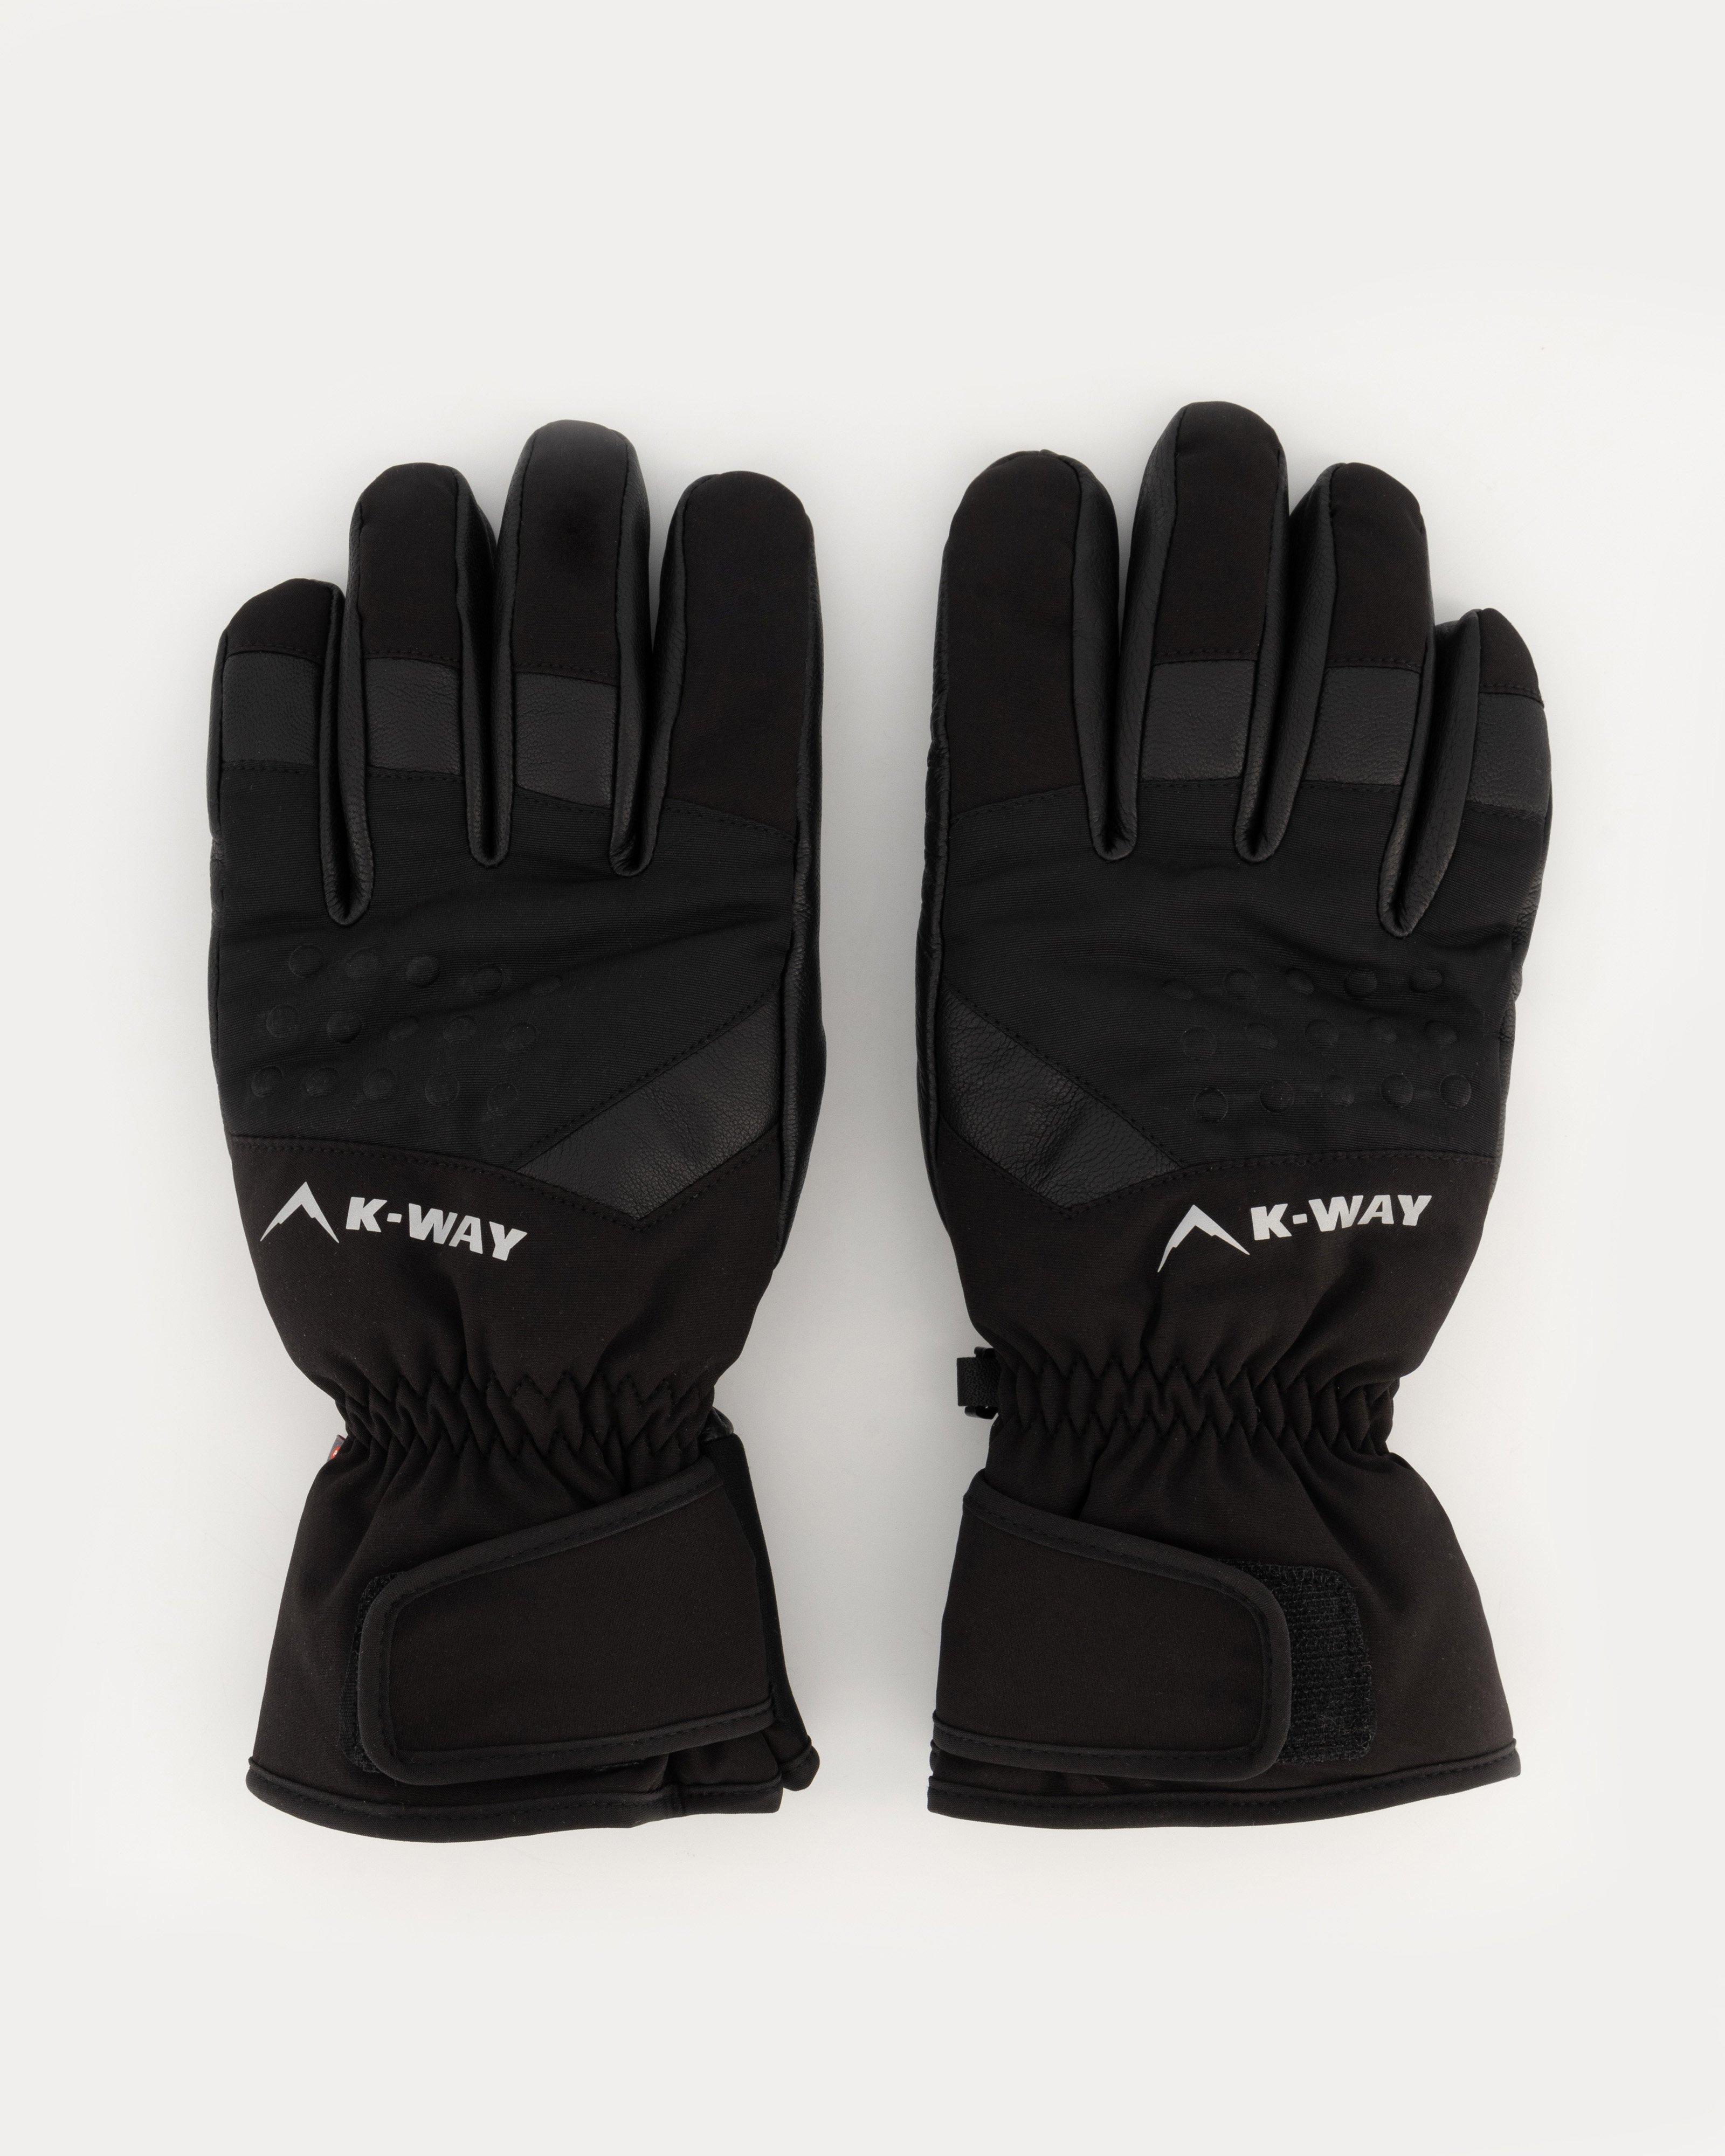 K-Way Piste Gloves -  Black